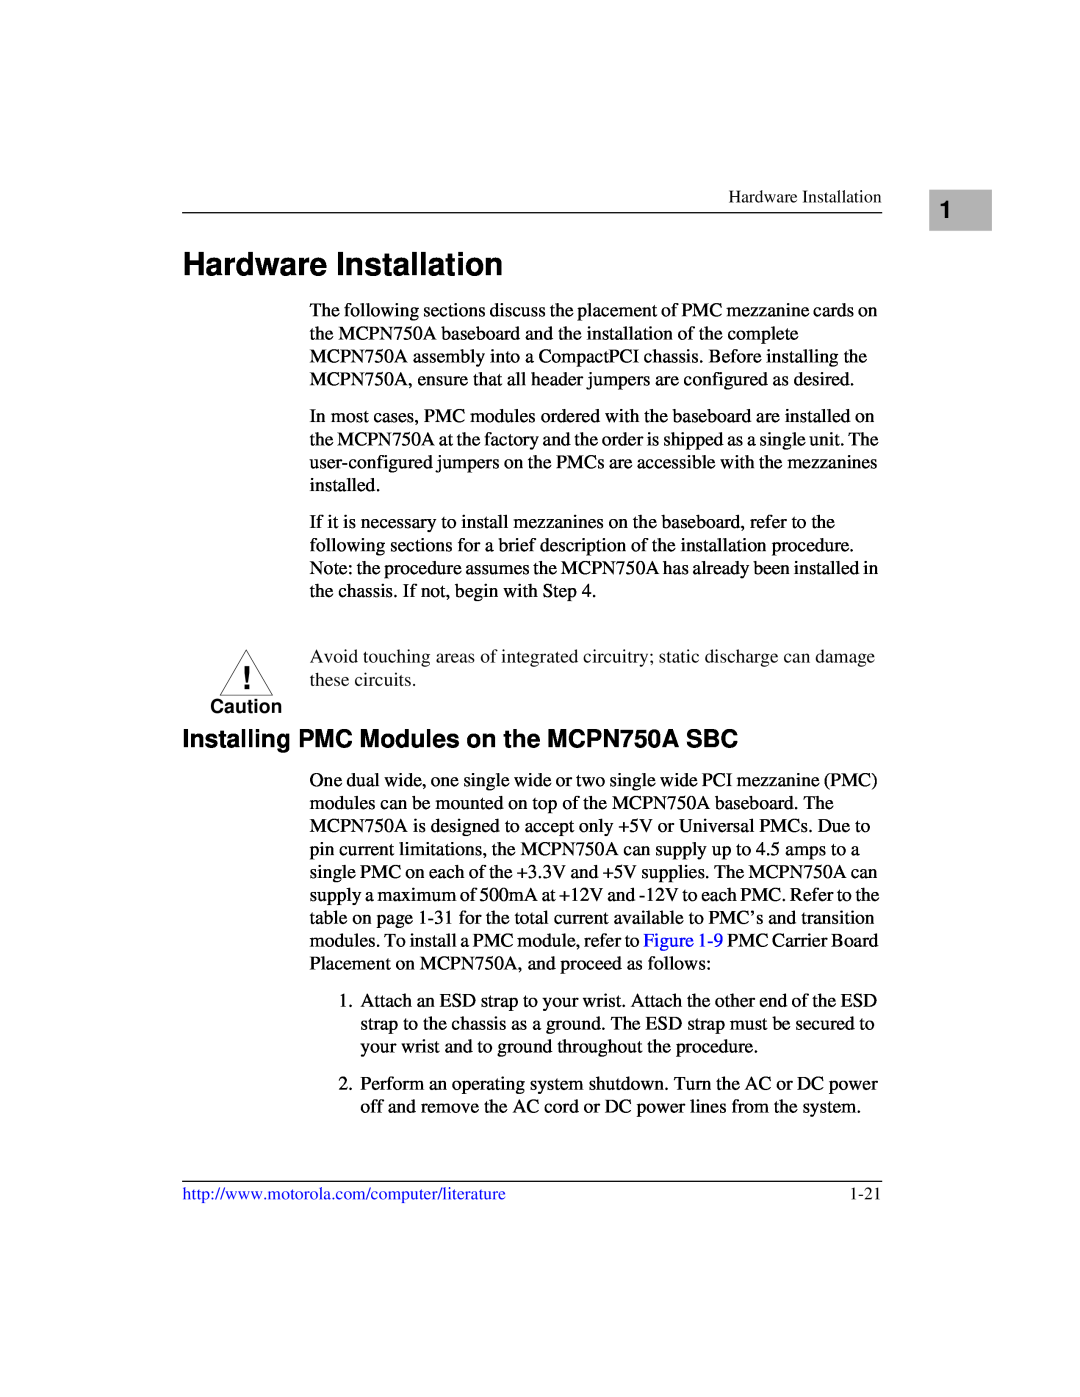 Motorola IH5 manual Hardware Installation, Installing PMC Modules on the MCPN750A SBC 